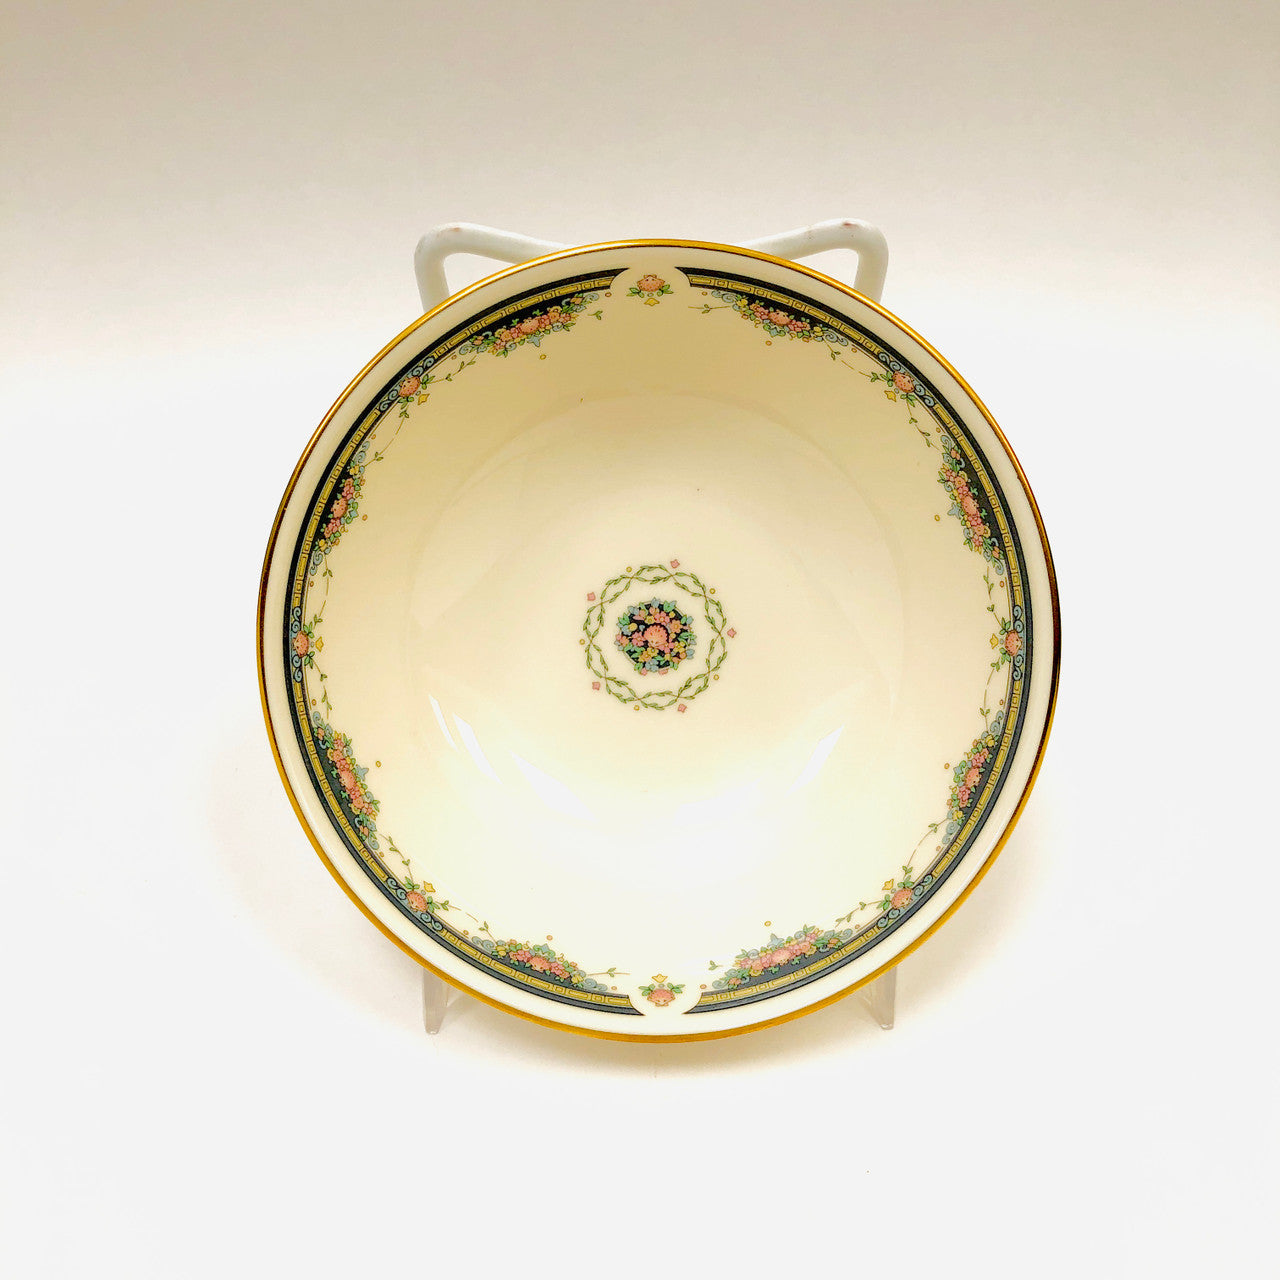 Royal Doulton, Albany, Nappie Bowl, Dessert or Fruit Bowl, Vintage, Fine Bone China, Ceramic, England